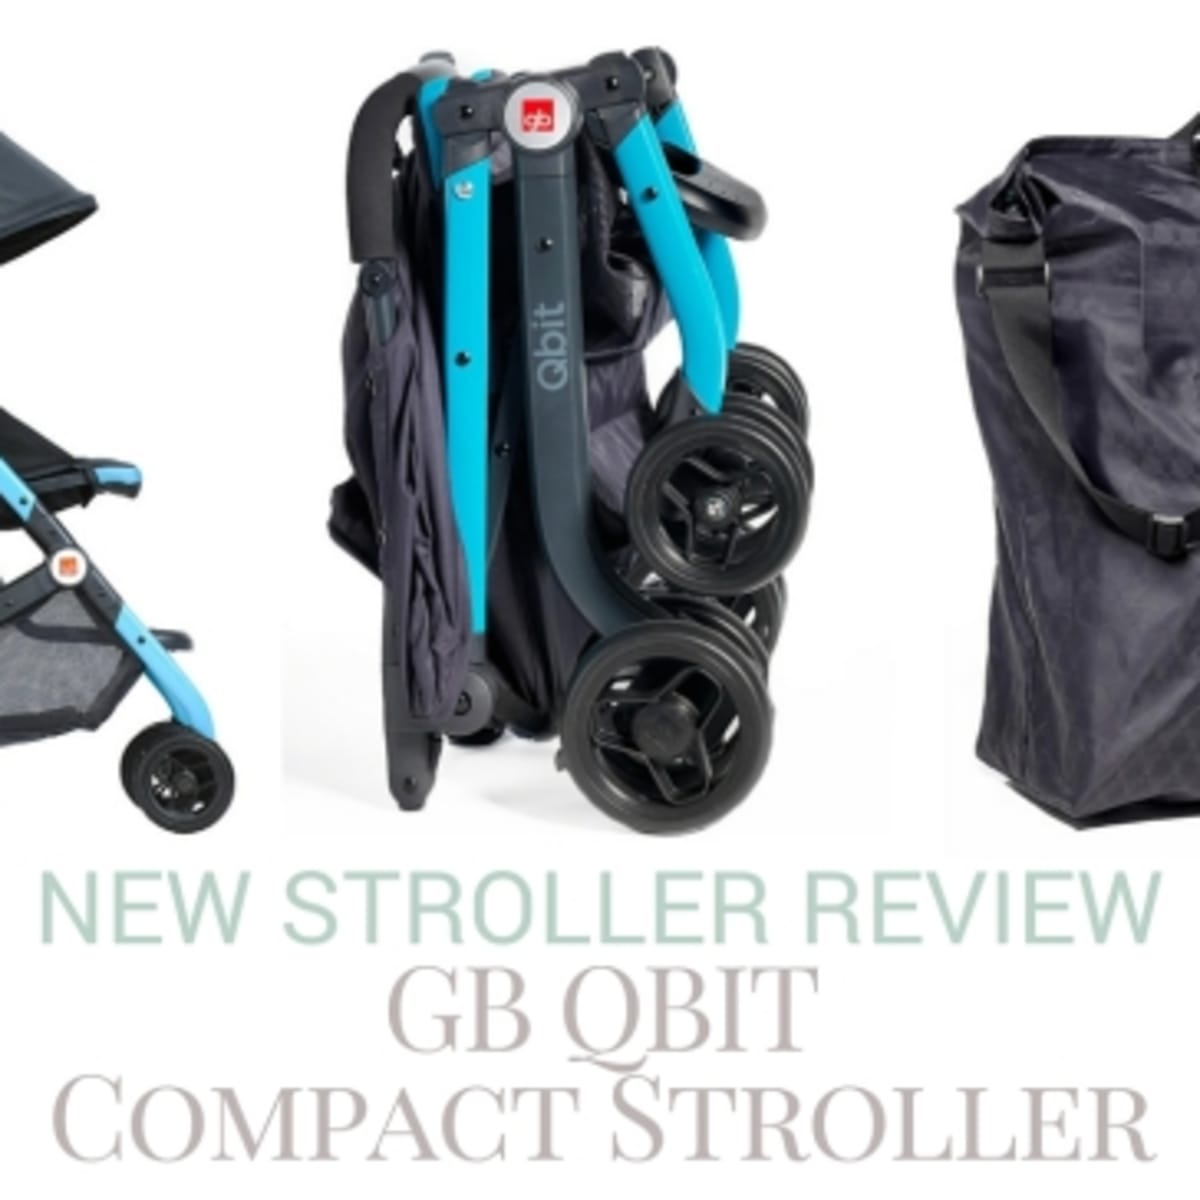 gb qbit stroller review